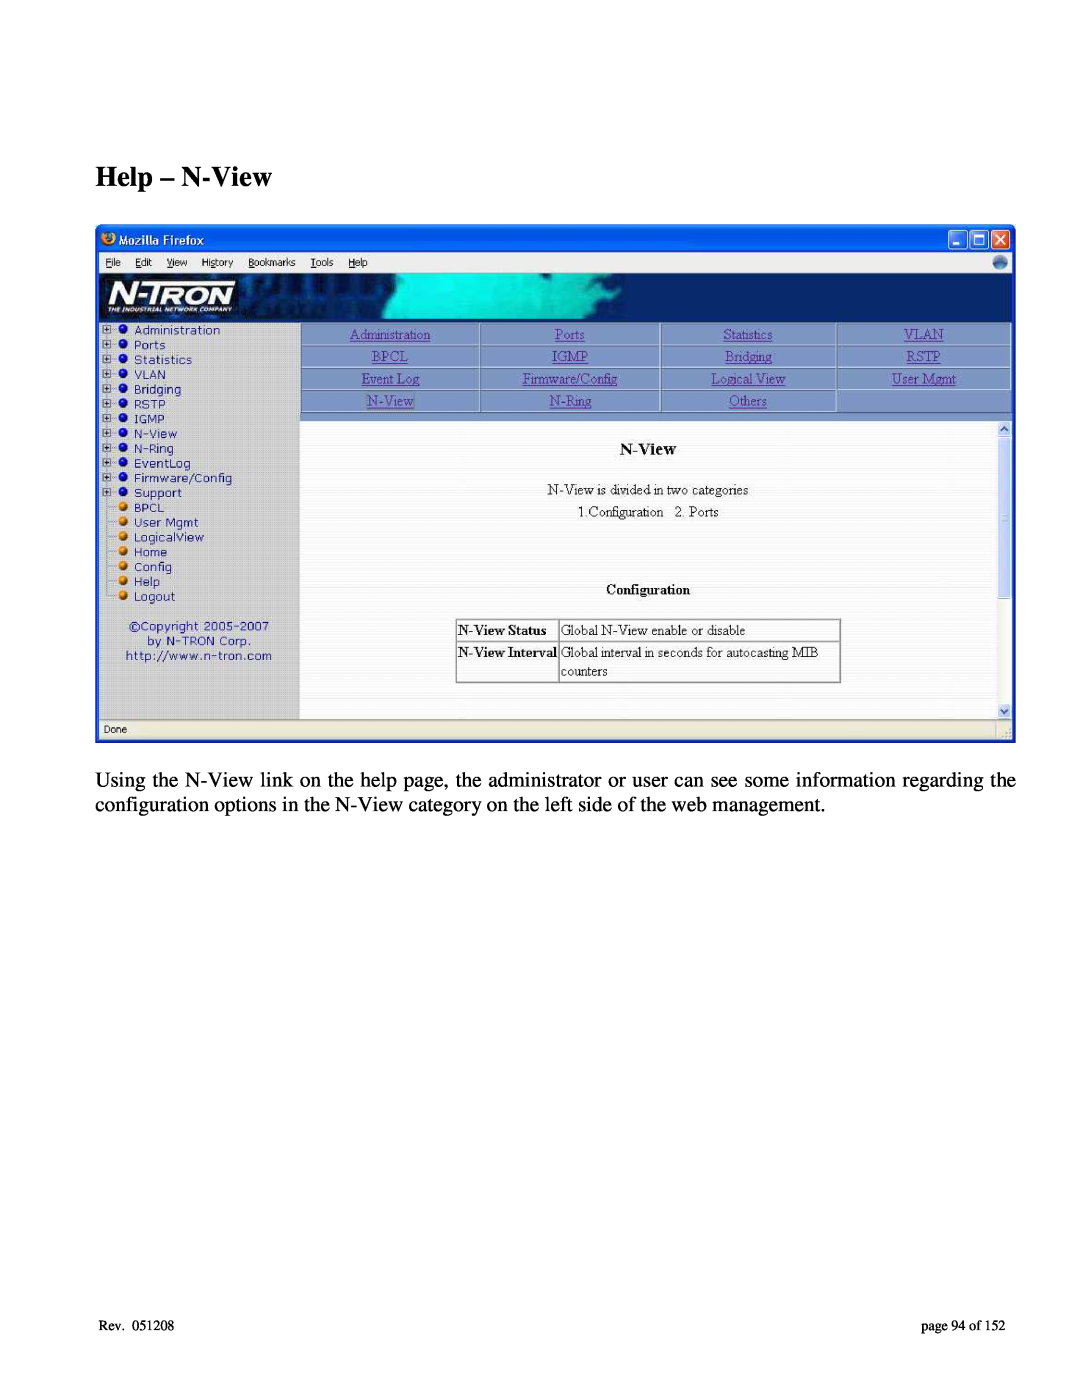 Gigabyte 7014 user manual Help - N-View, page 94 of 